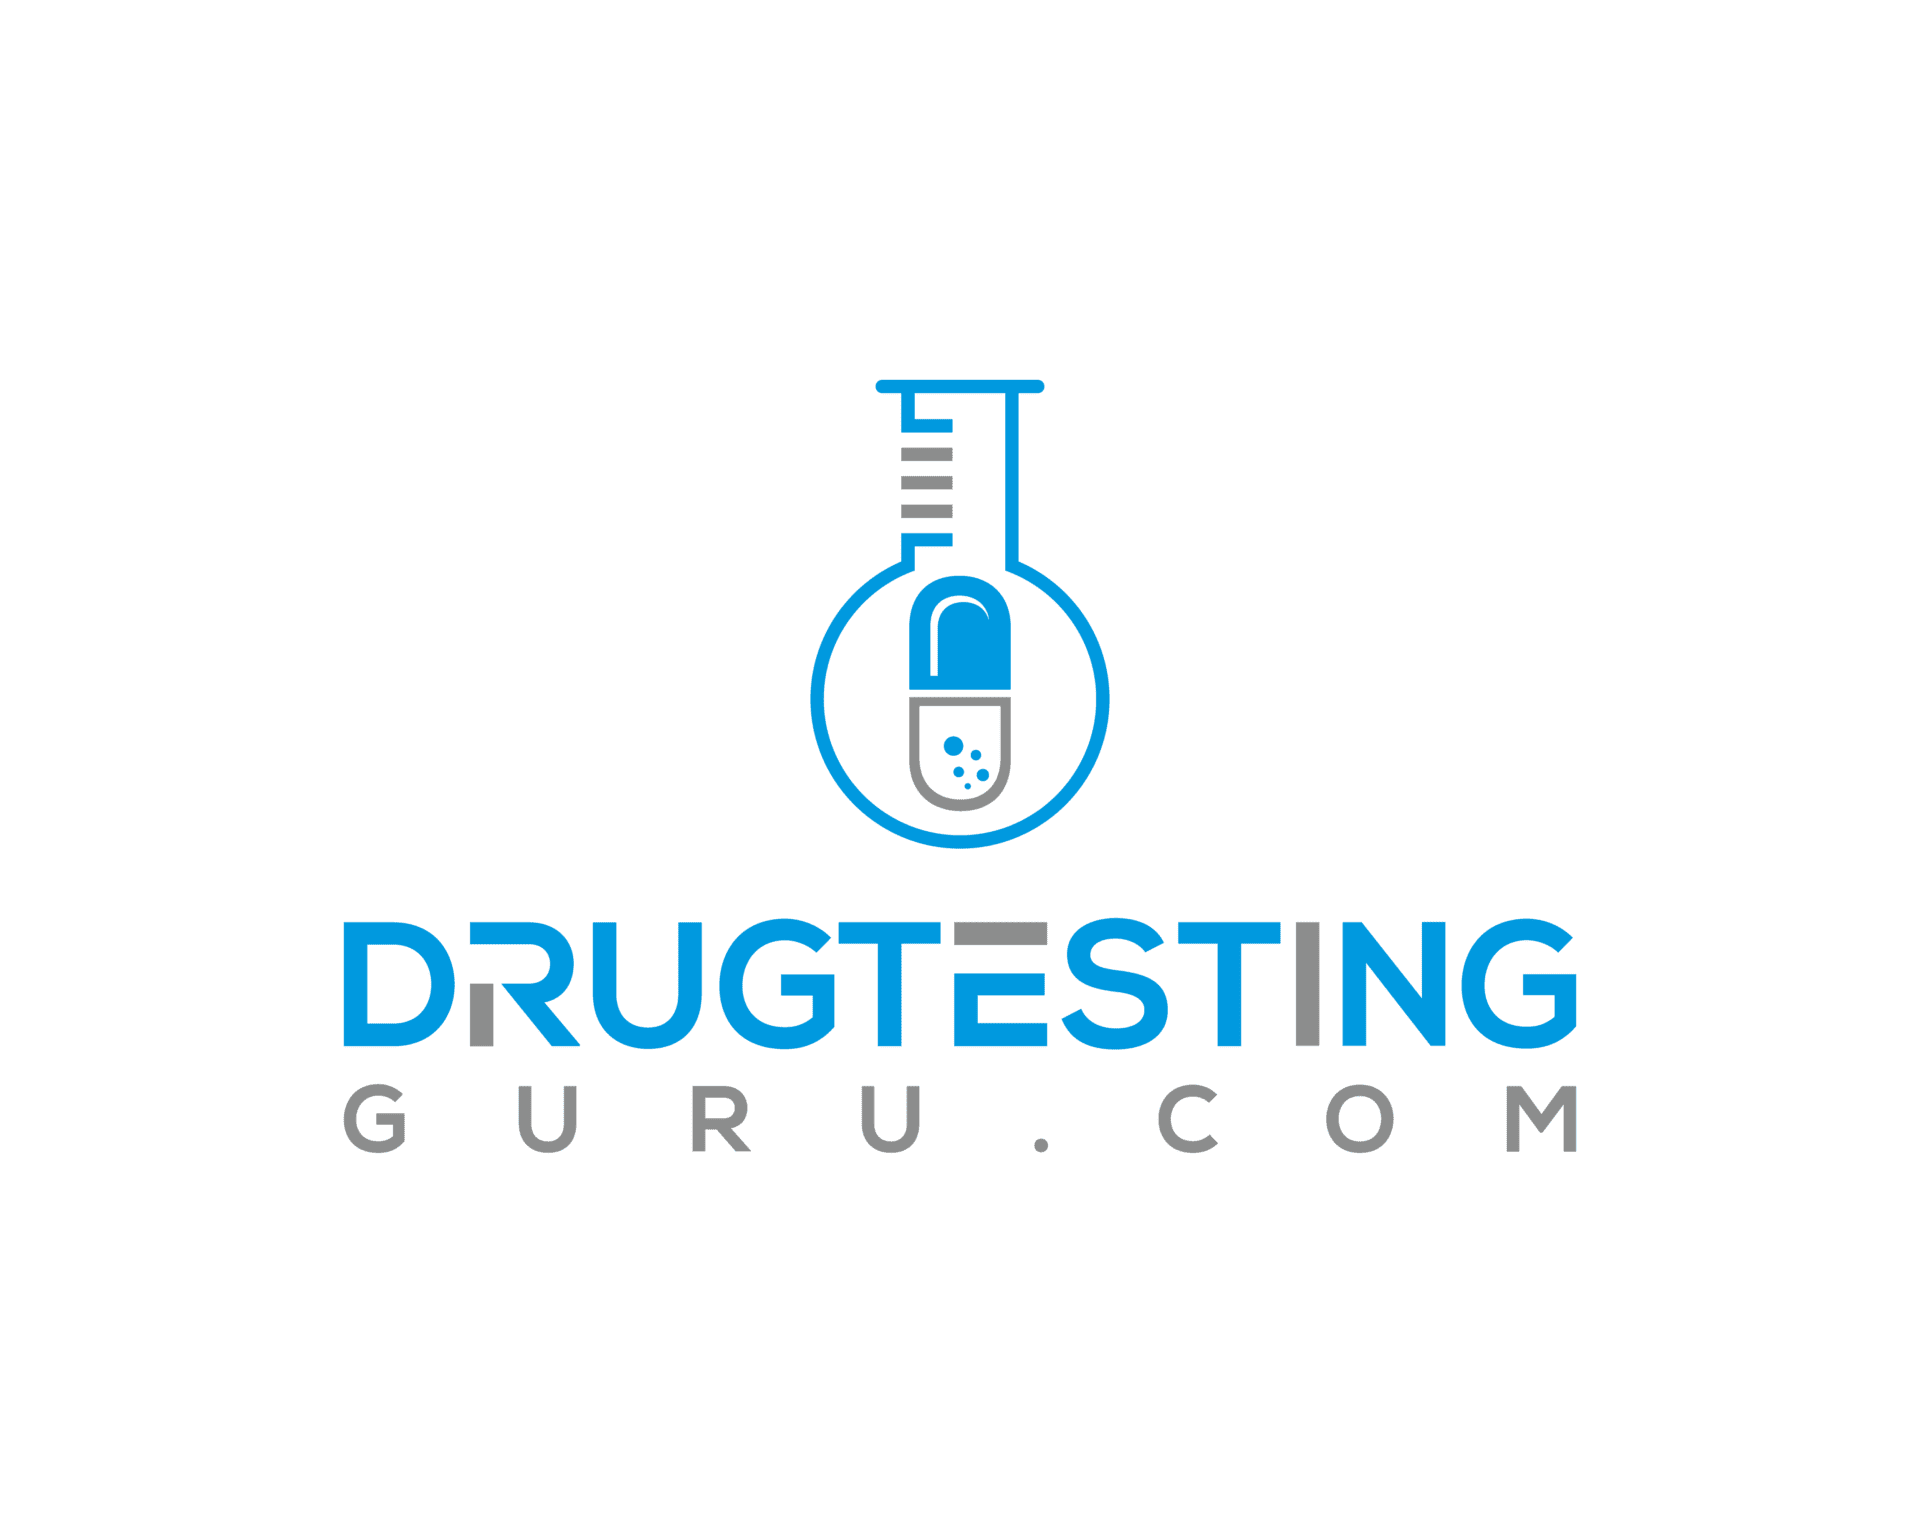 DRUGTESTING GURU.COM